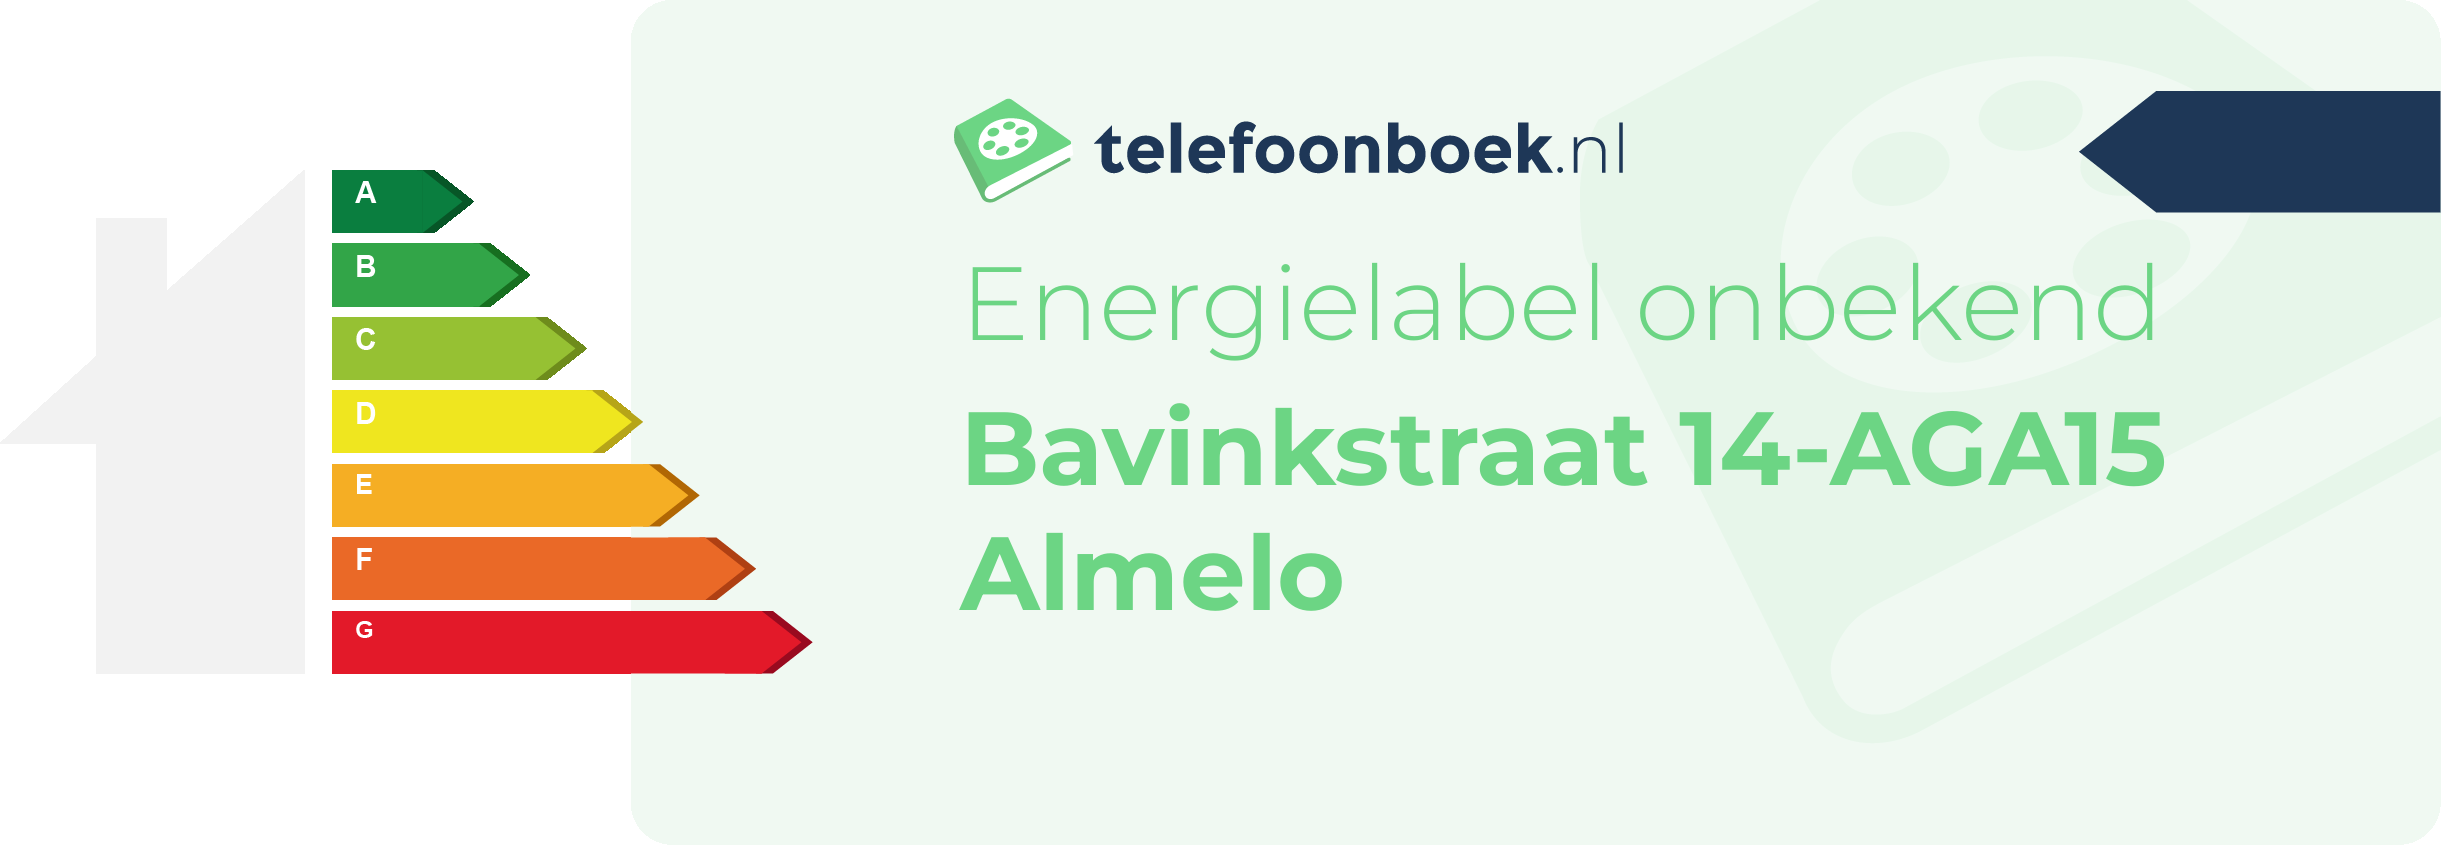 Energielabel Bavinkstraat 14-AGA15 Almelo